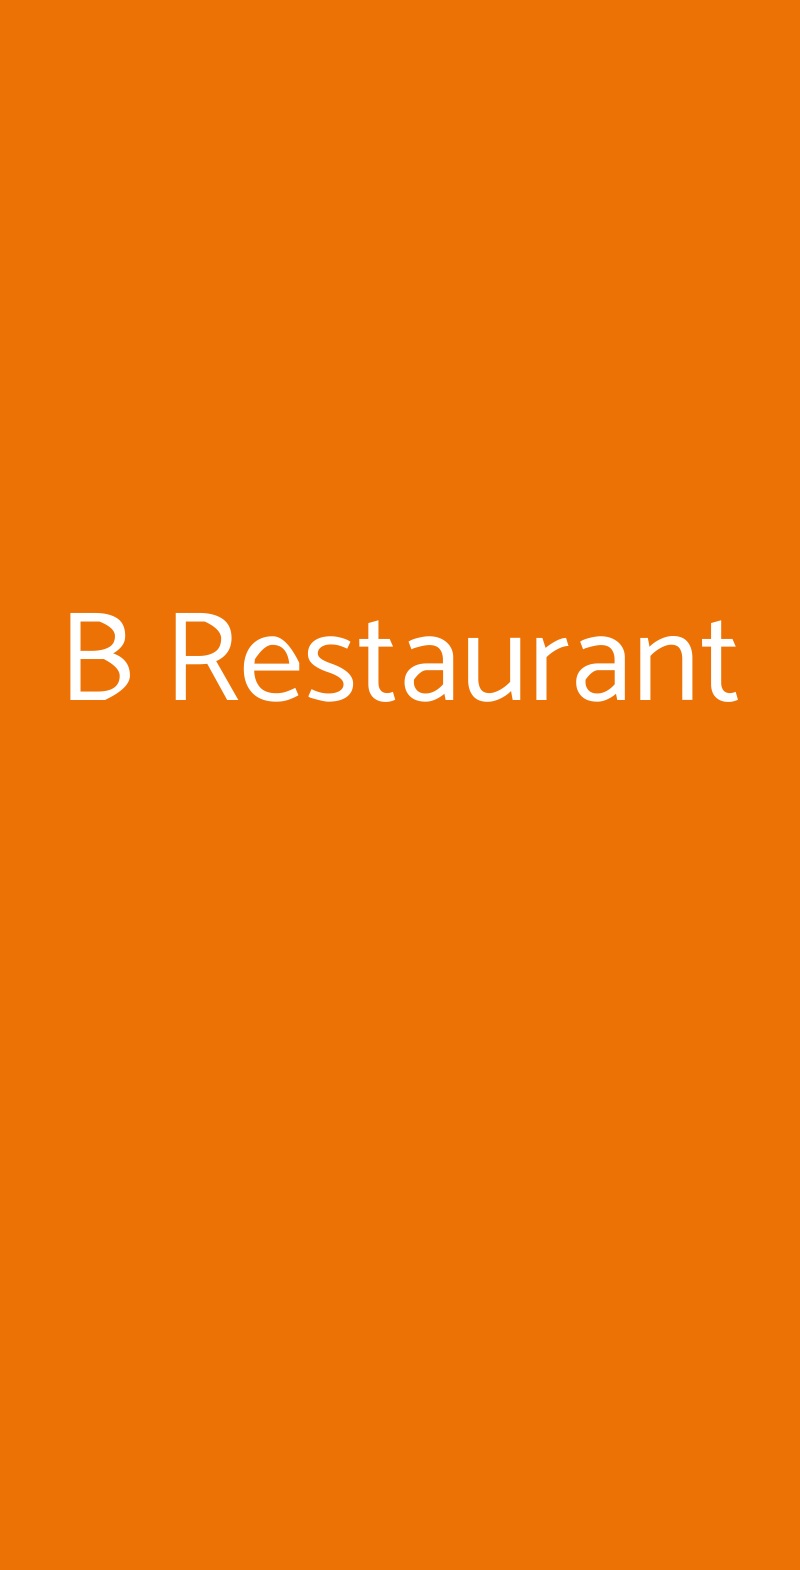 B Restaurant Milano menù 1 pagina